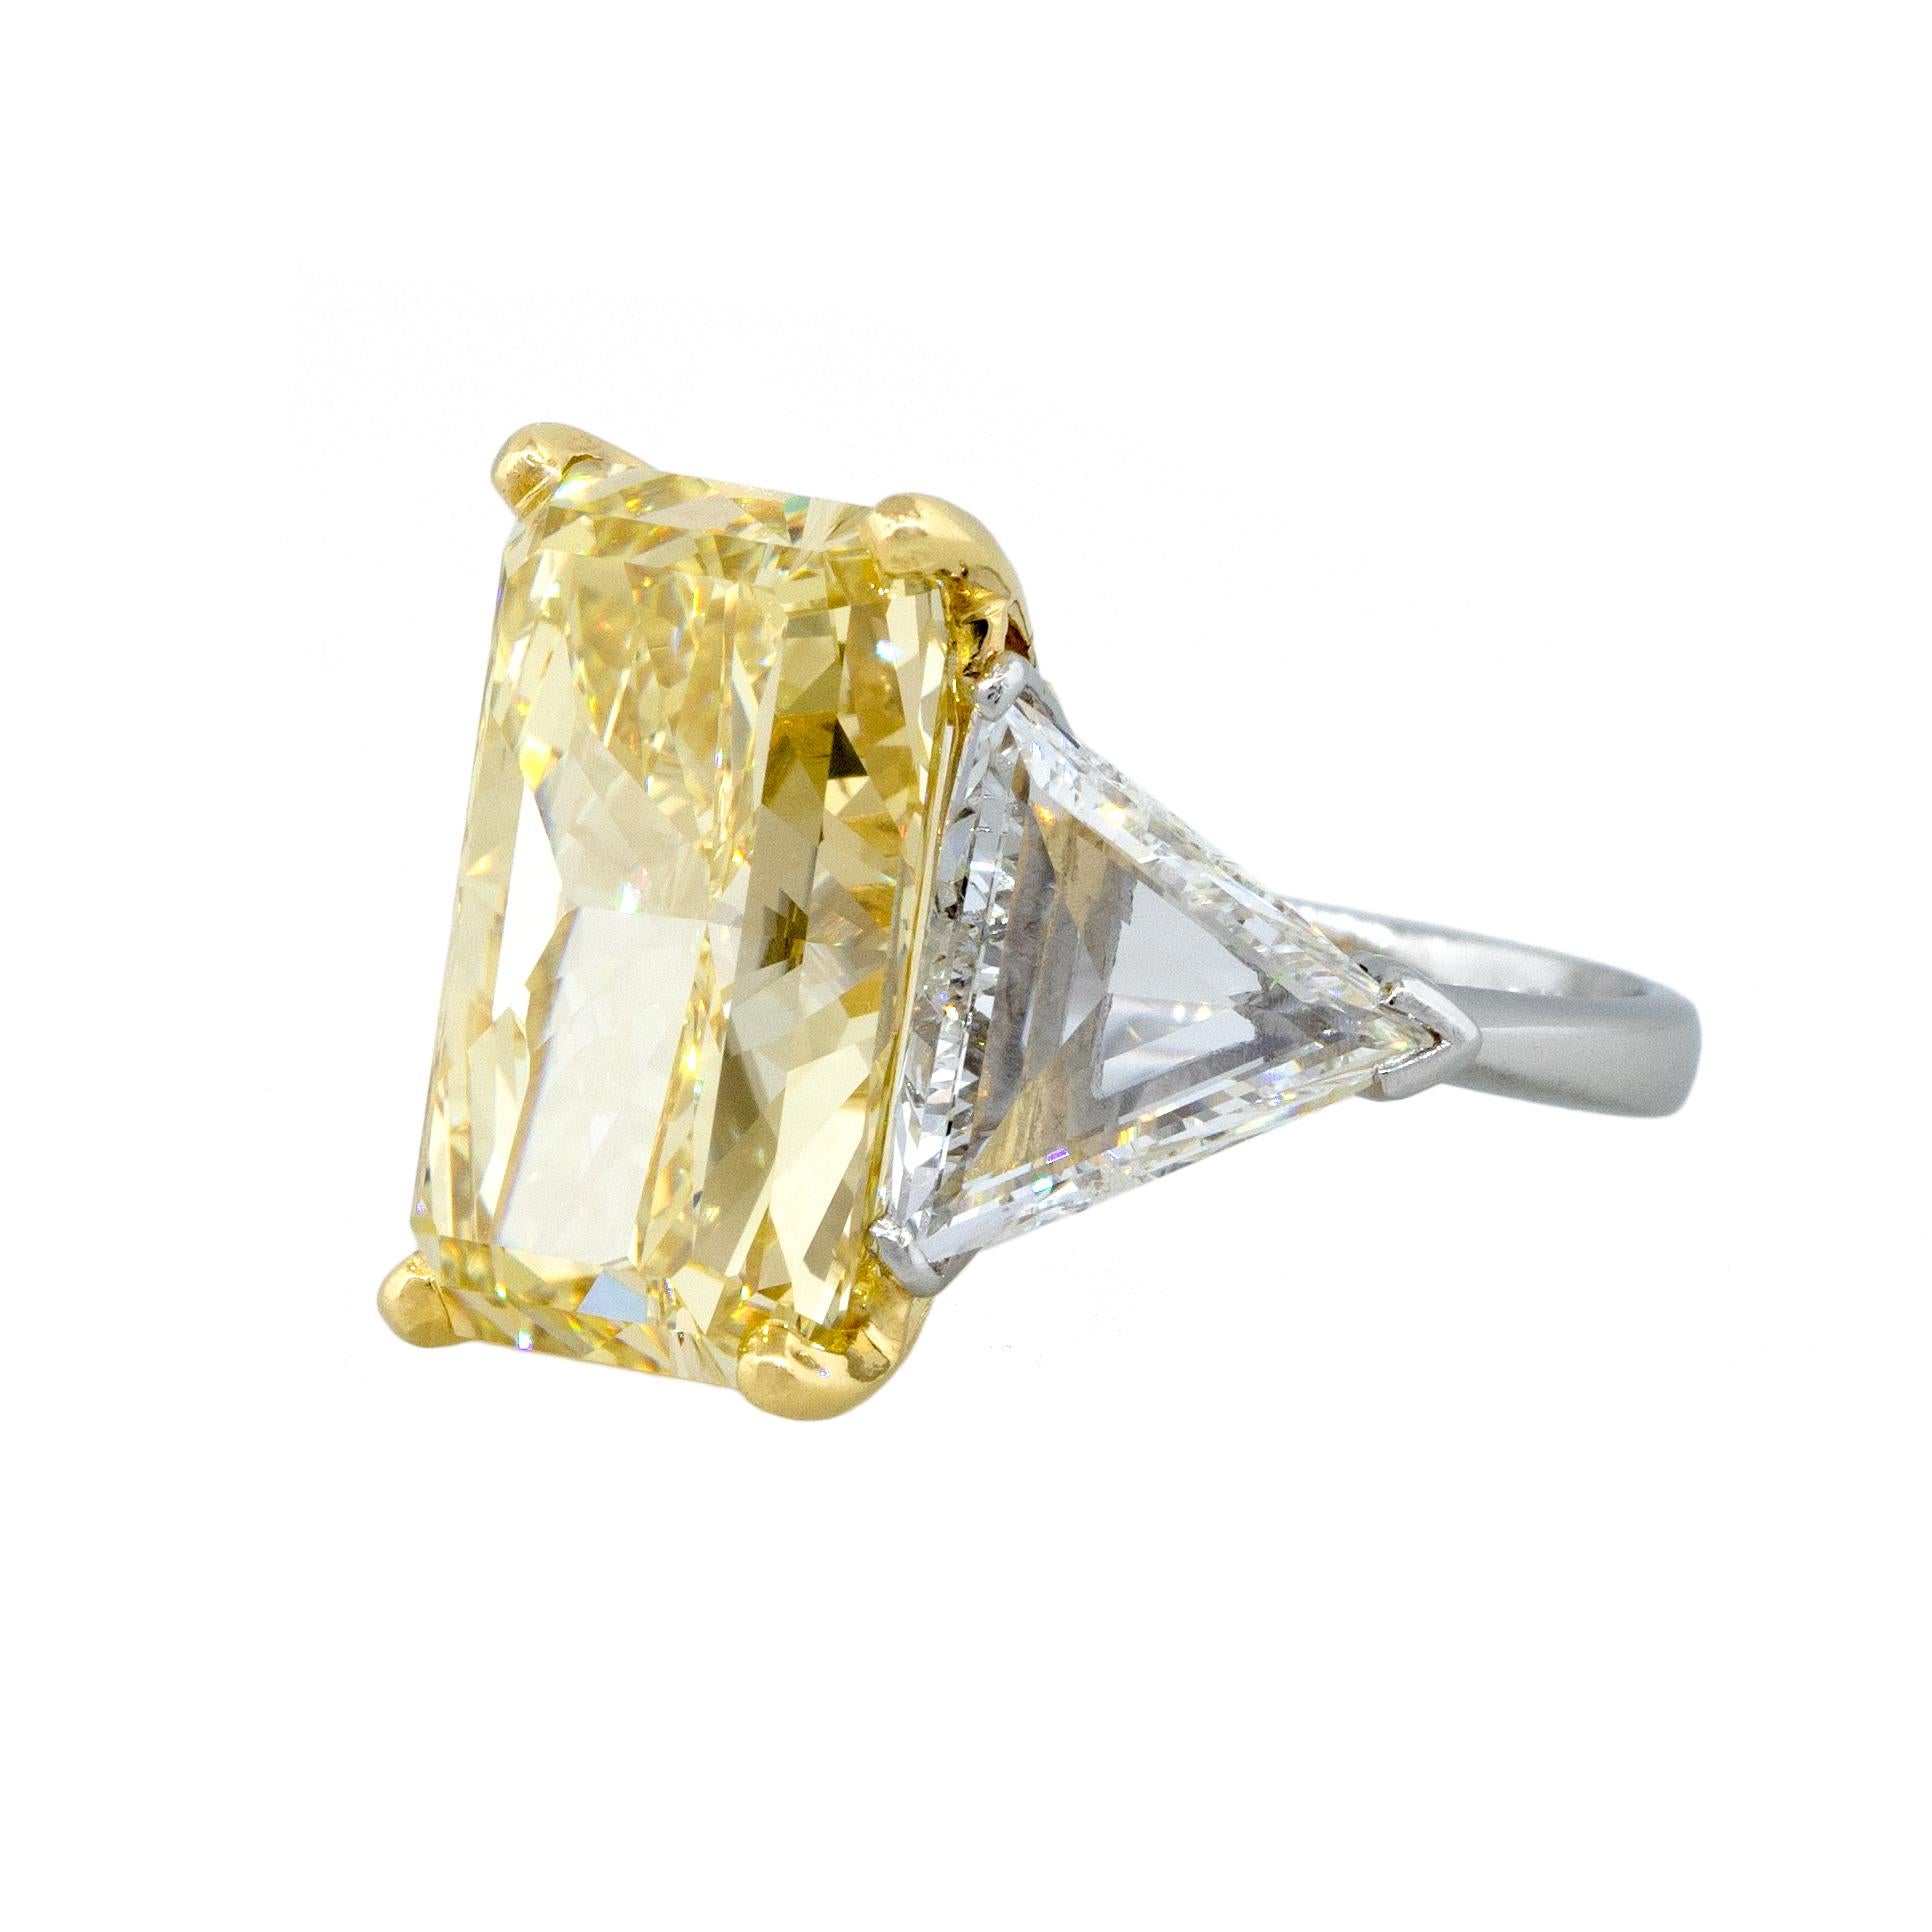 Style: 12.02 Fancy Yellow Internally Flawless Diamond Engagement Ring

Main Diamond Details: GIA certified 12.02ctw Radiant Cut Fancy Yellow and Internally Flawless Clarity Diamond
GIA Cert #: 1142470792
Diamond Measurements: 16.20mm x 10.46mm x